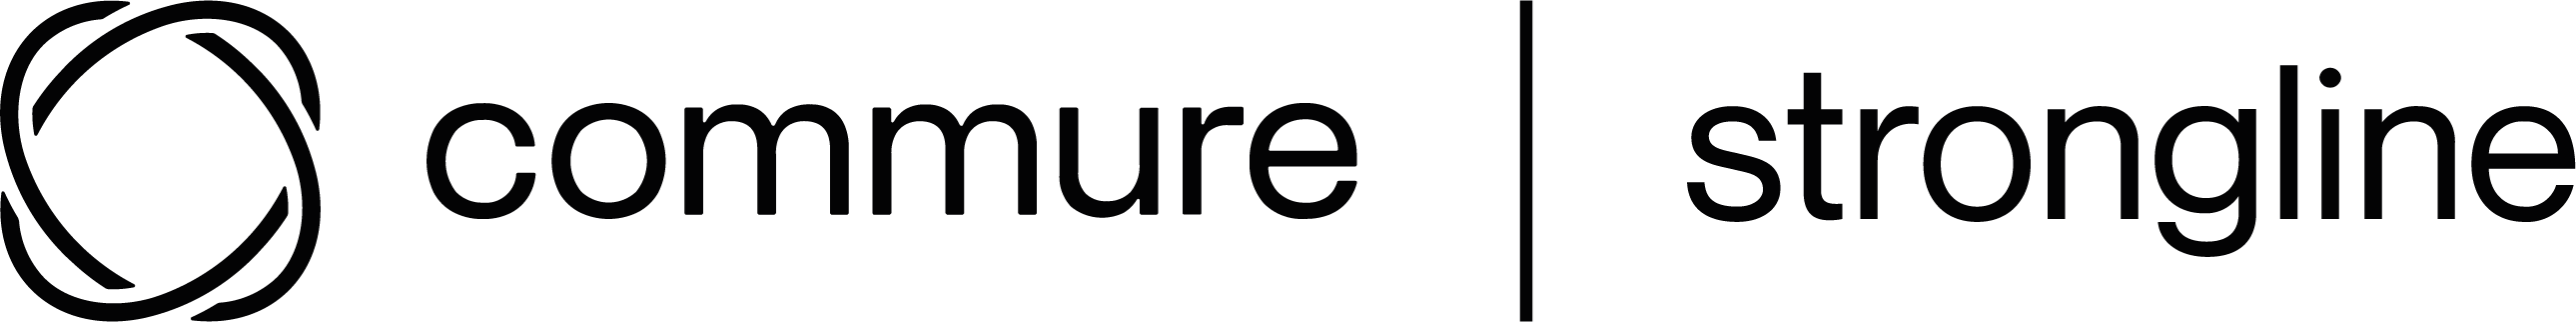 commure strongline logo